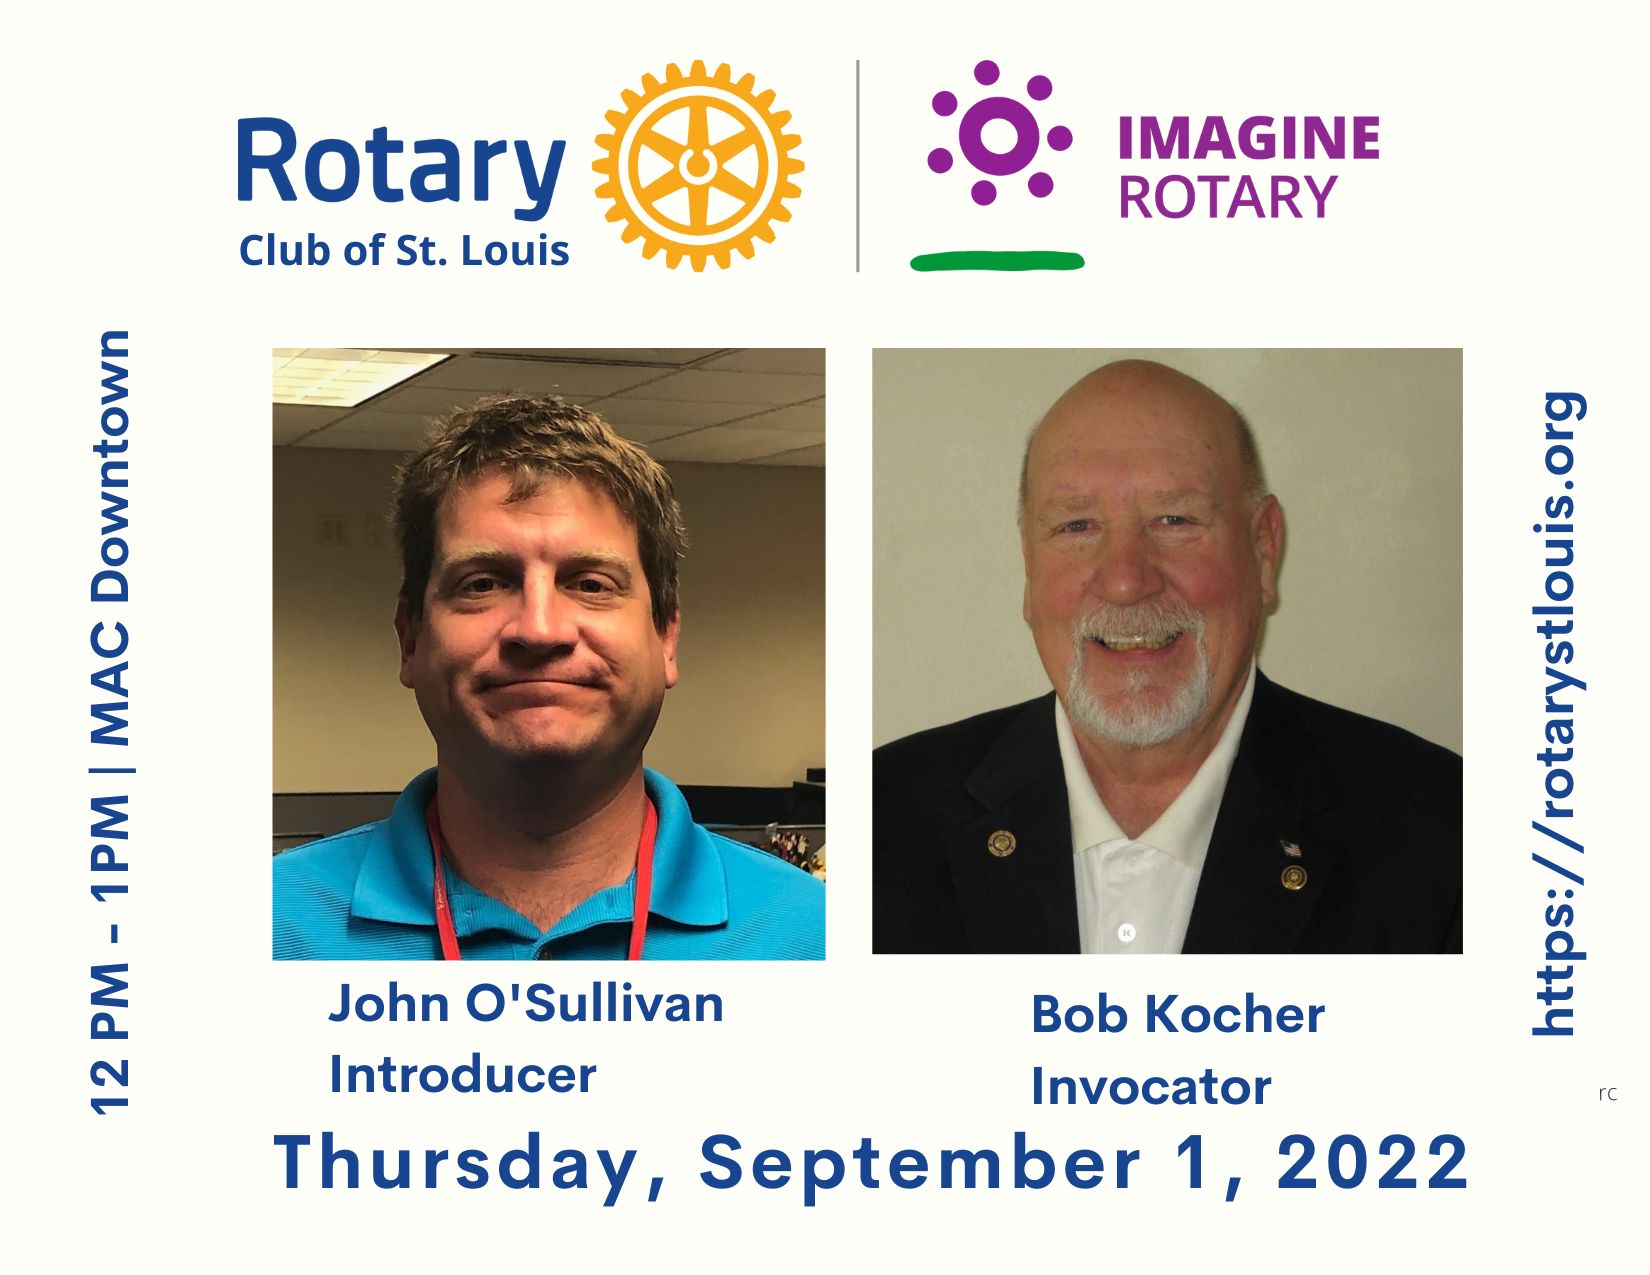 John O'Sullivan, Introducer and Bob Kocher, Invocator at St. Louis Rotary on September 1, 2022